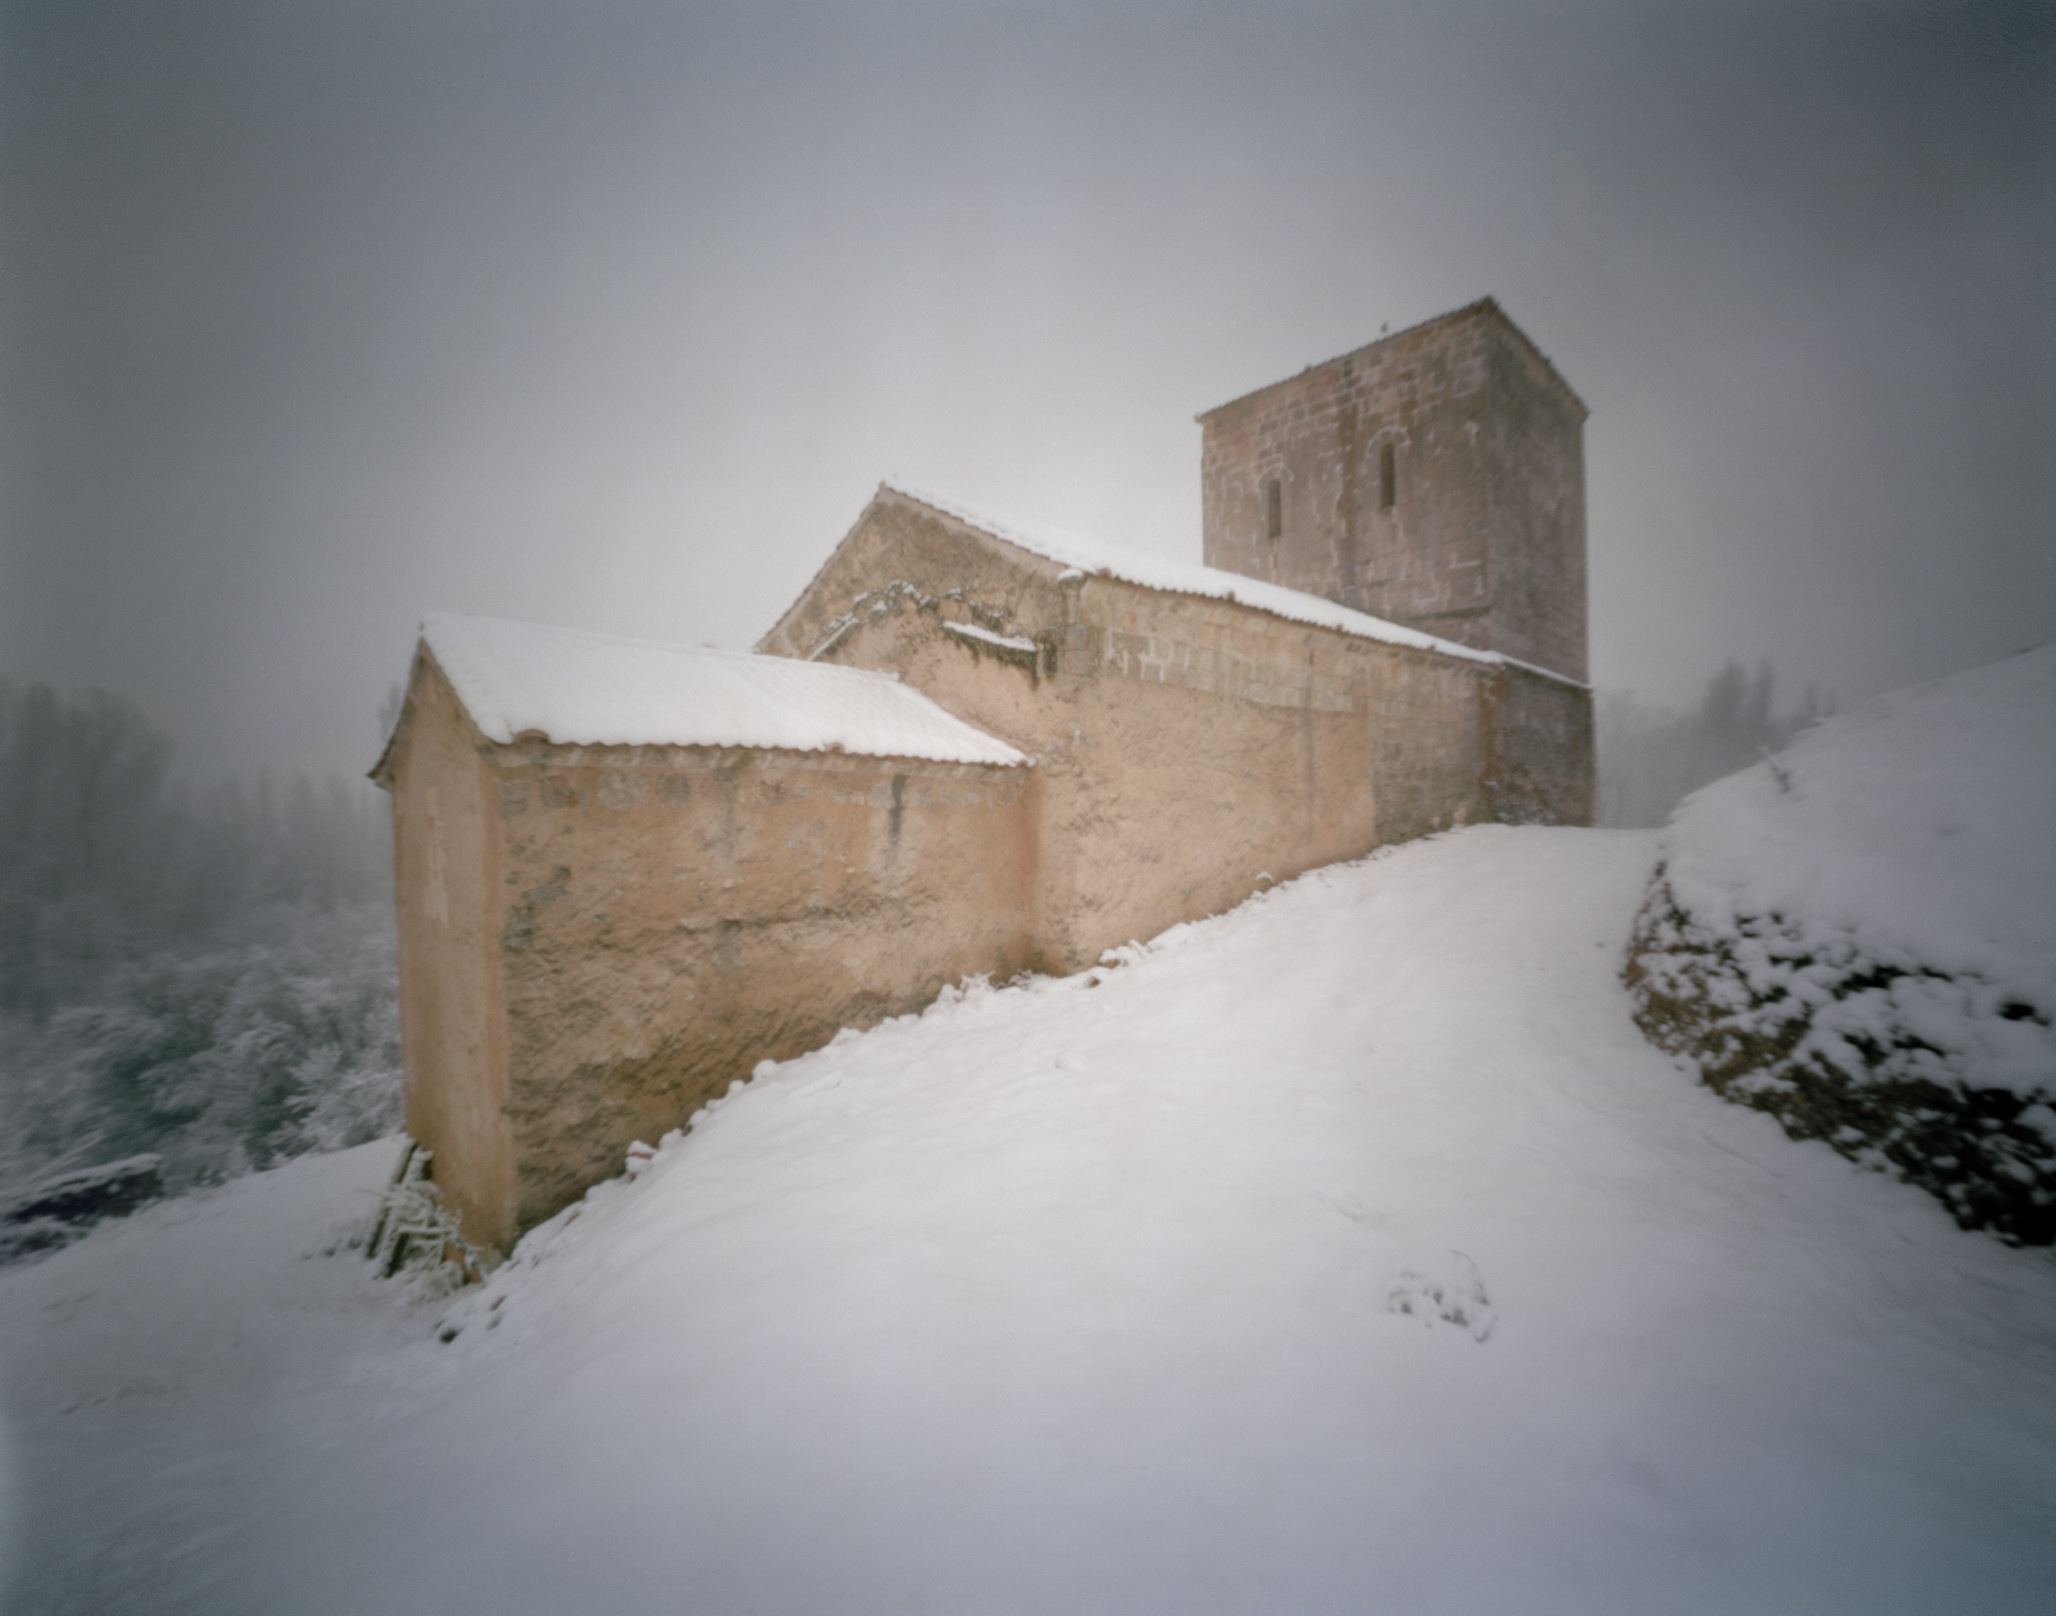 Romanesque hermitage in Spain